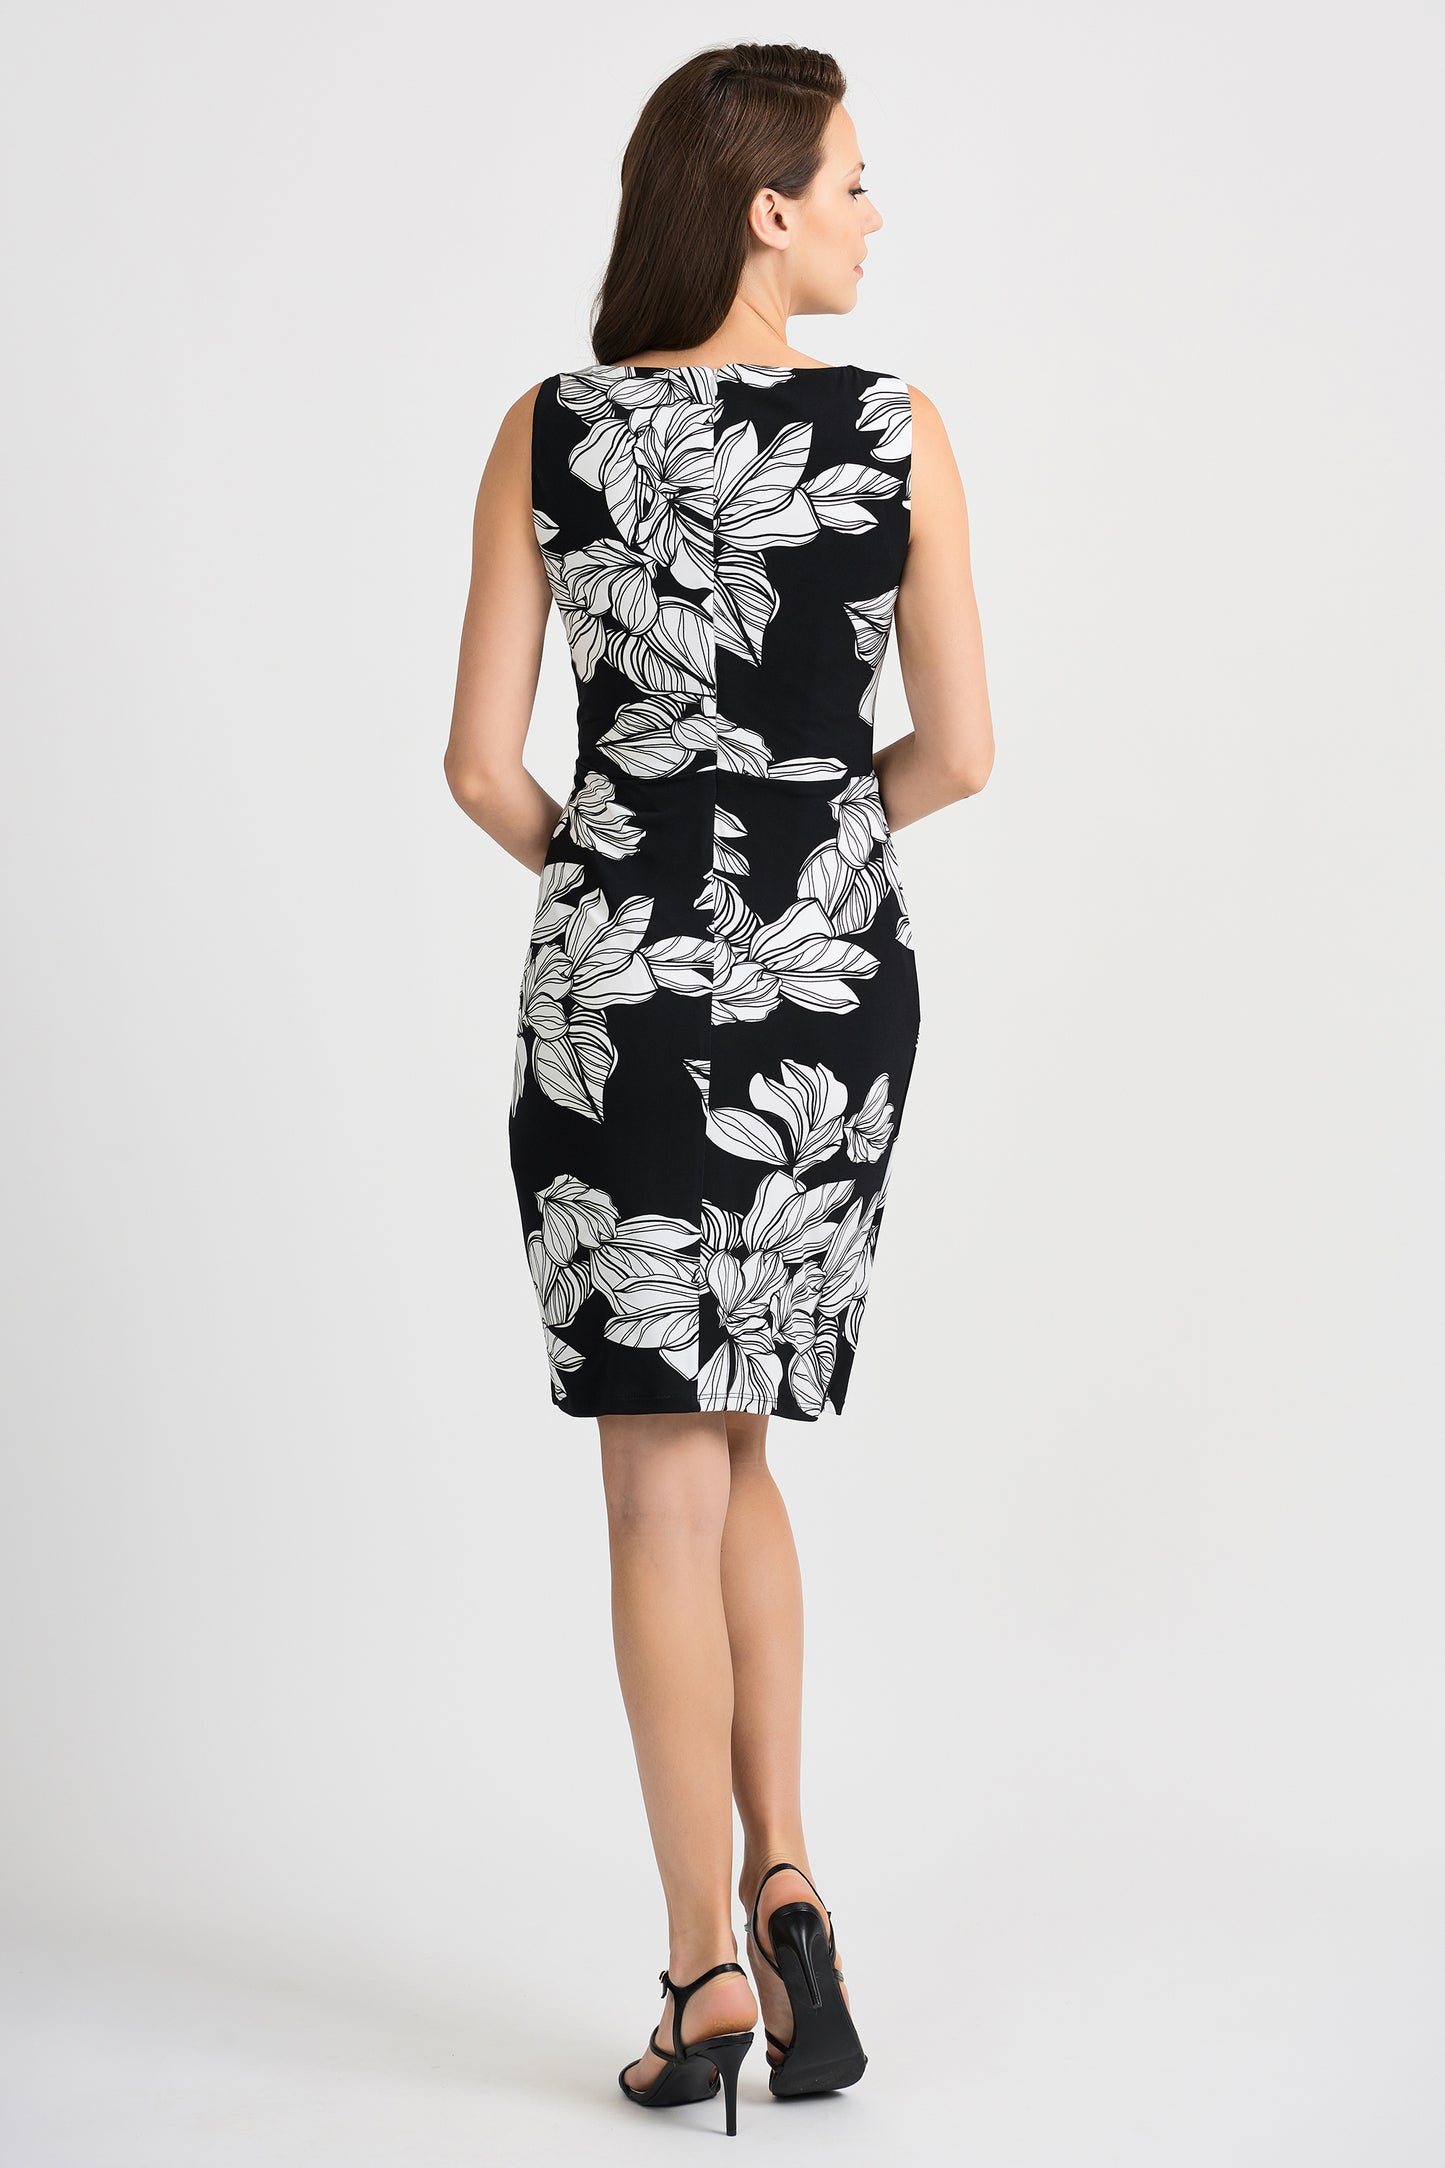 Joseph Ribkoff - Dress - Style 201519 - 50% Off